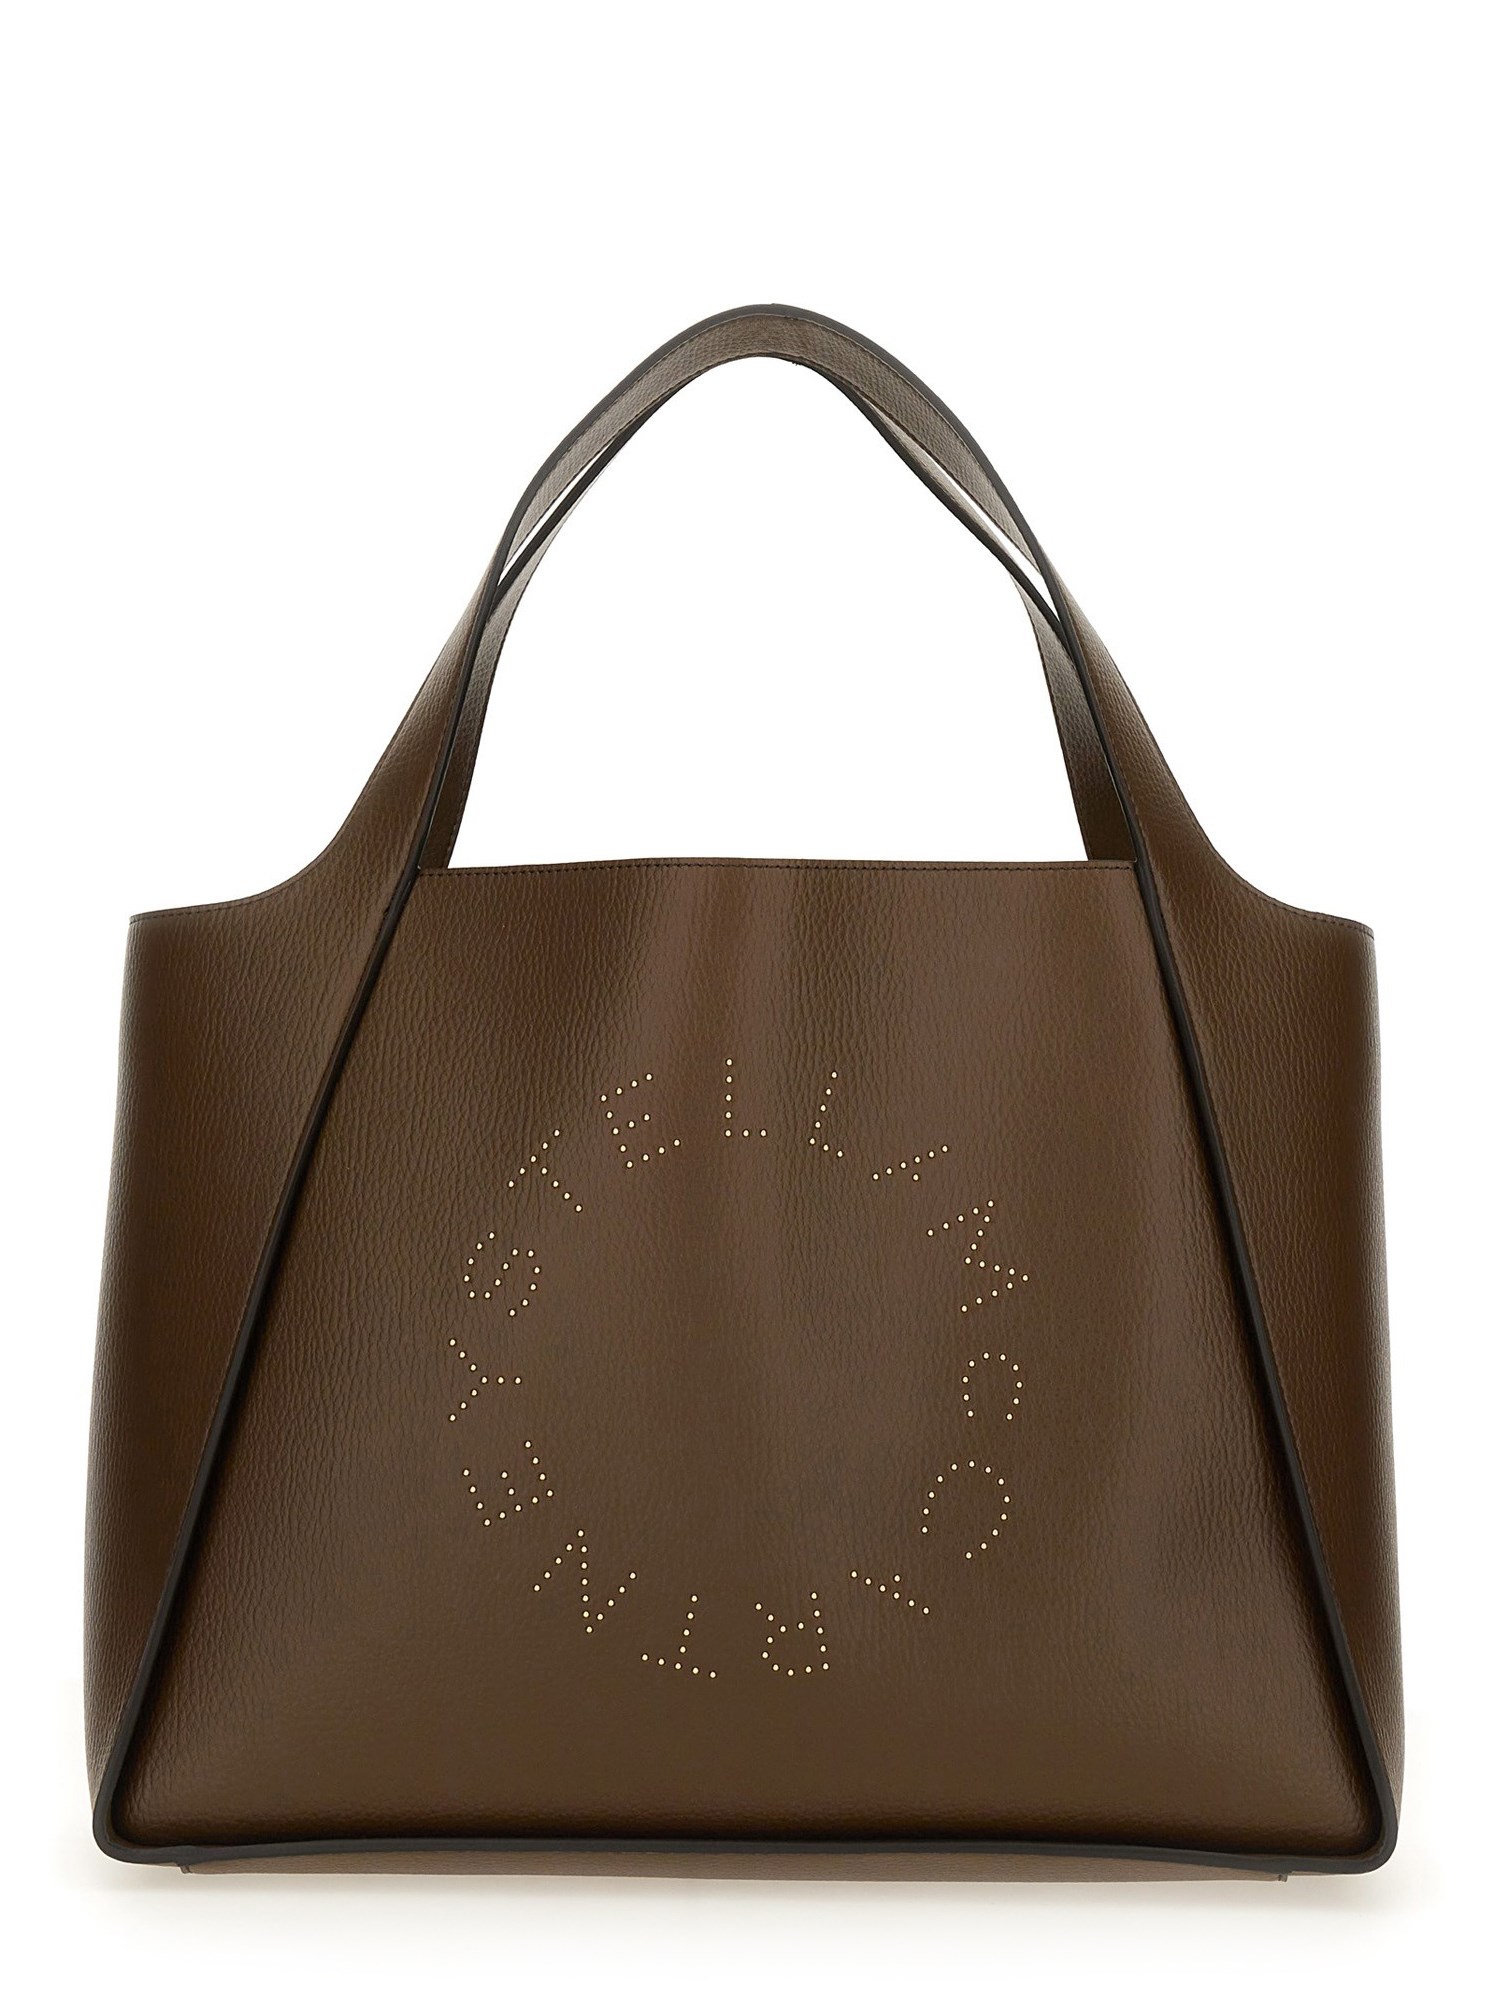 Stella McCartney stella mccartney tote bag with logo